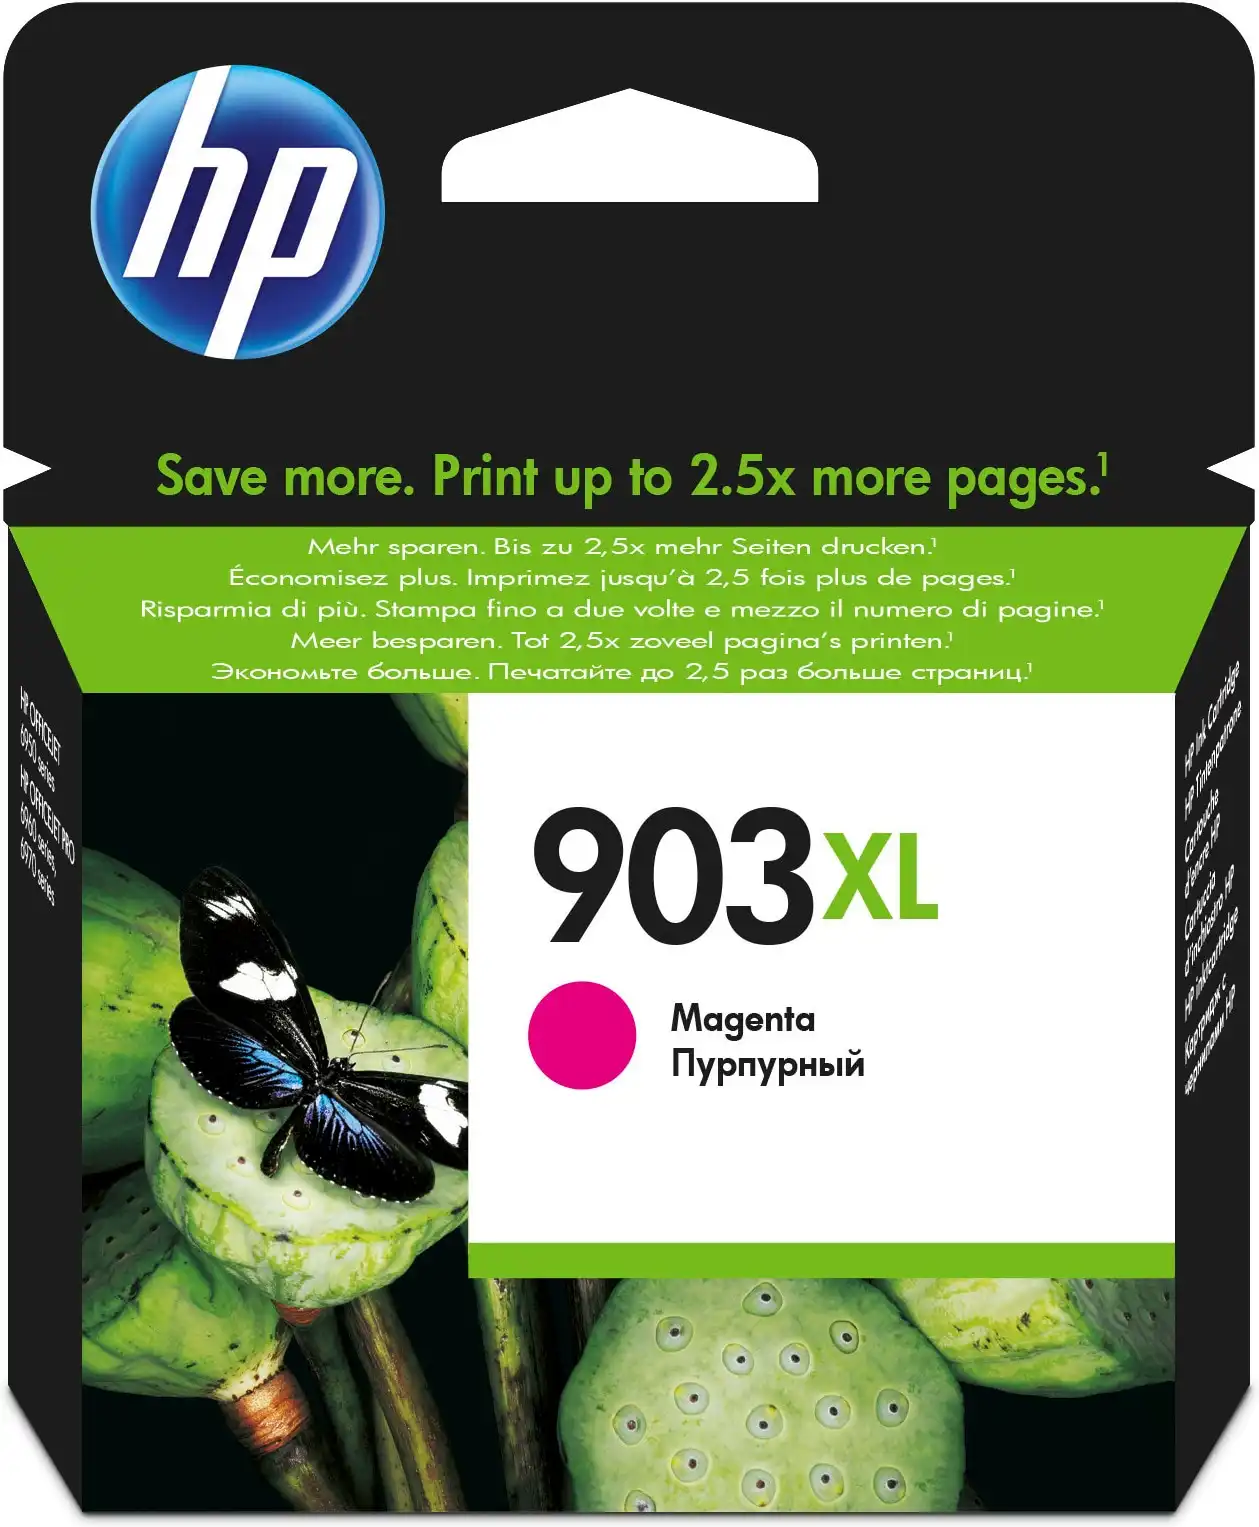 HP Cartouche d'encre magenta 903XL | T6M07AE 301 32151 chez Alfa print